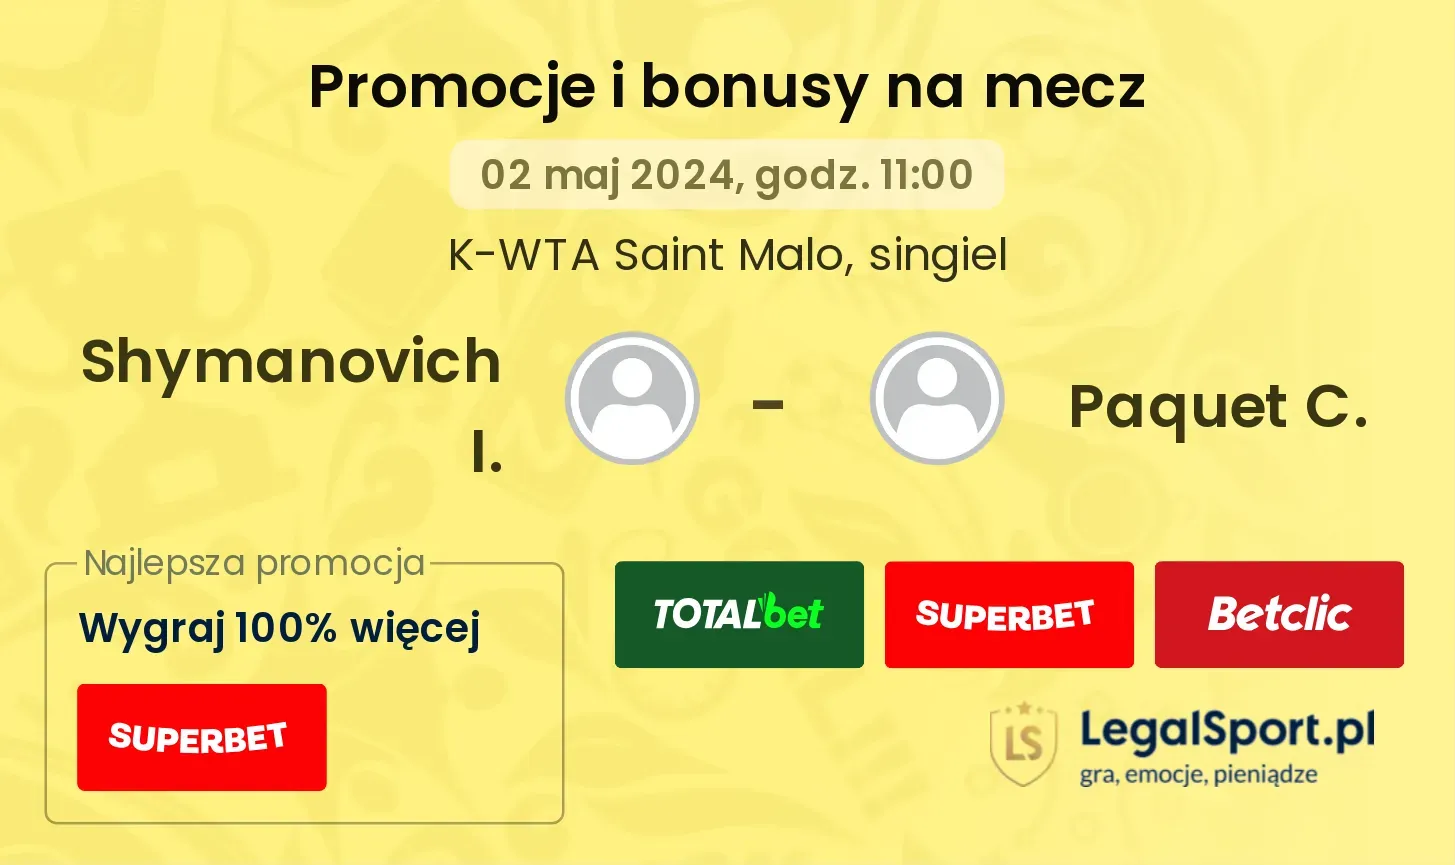 Shymanovich I. - Paquet C. promocje bonusy na mecz